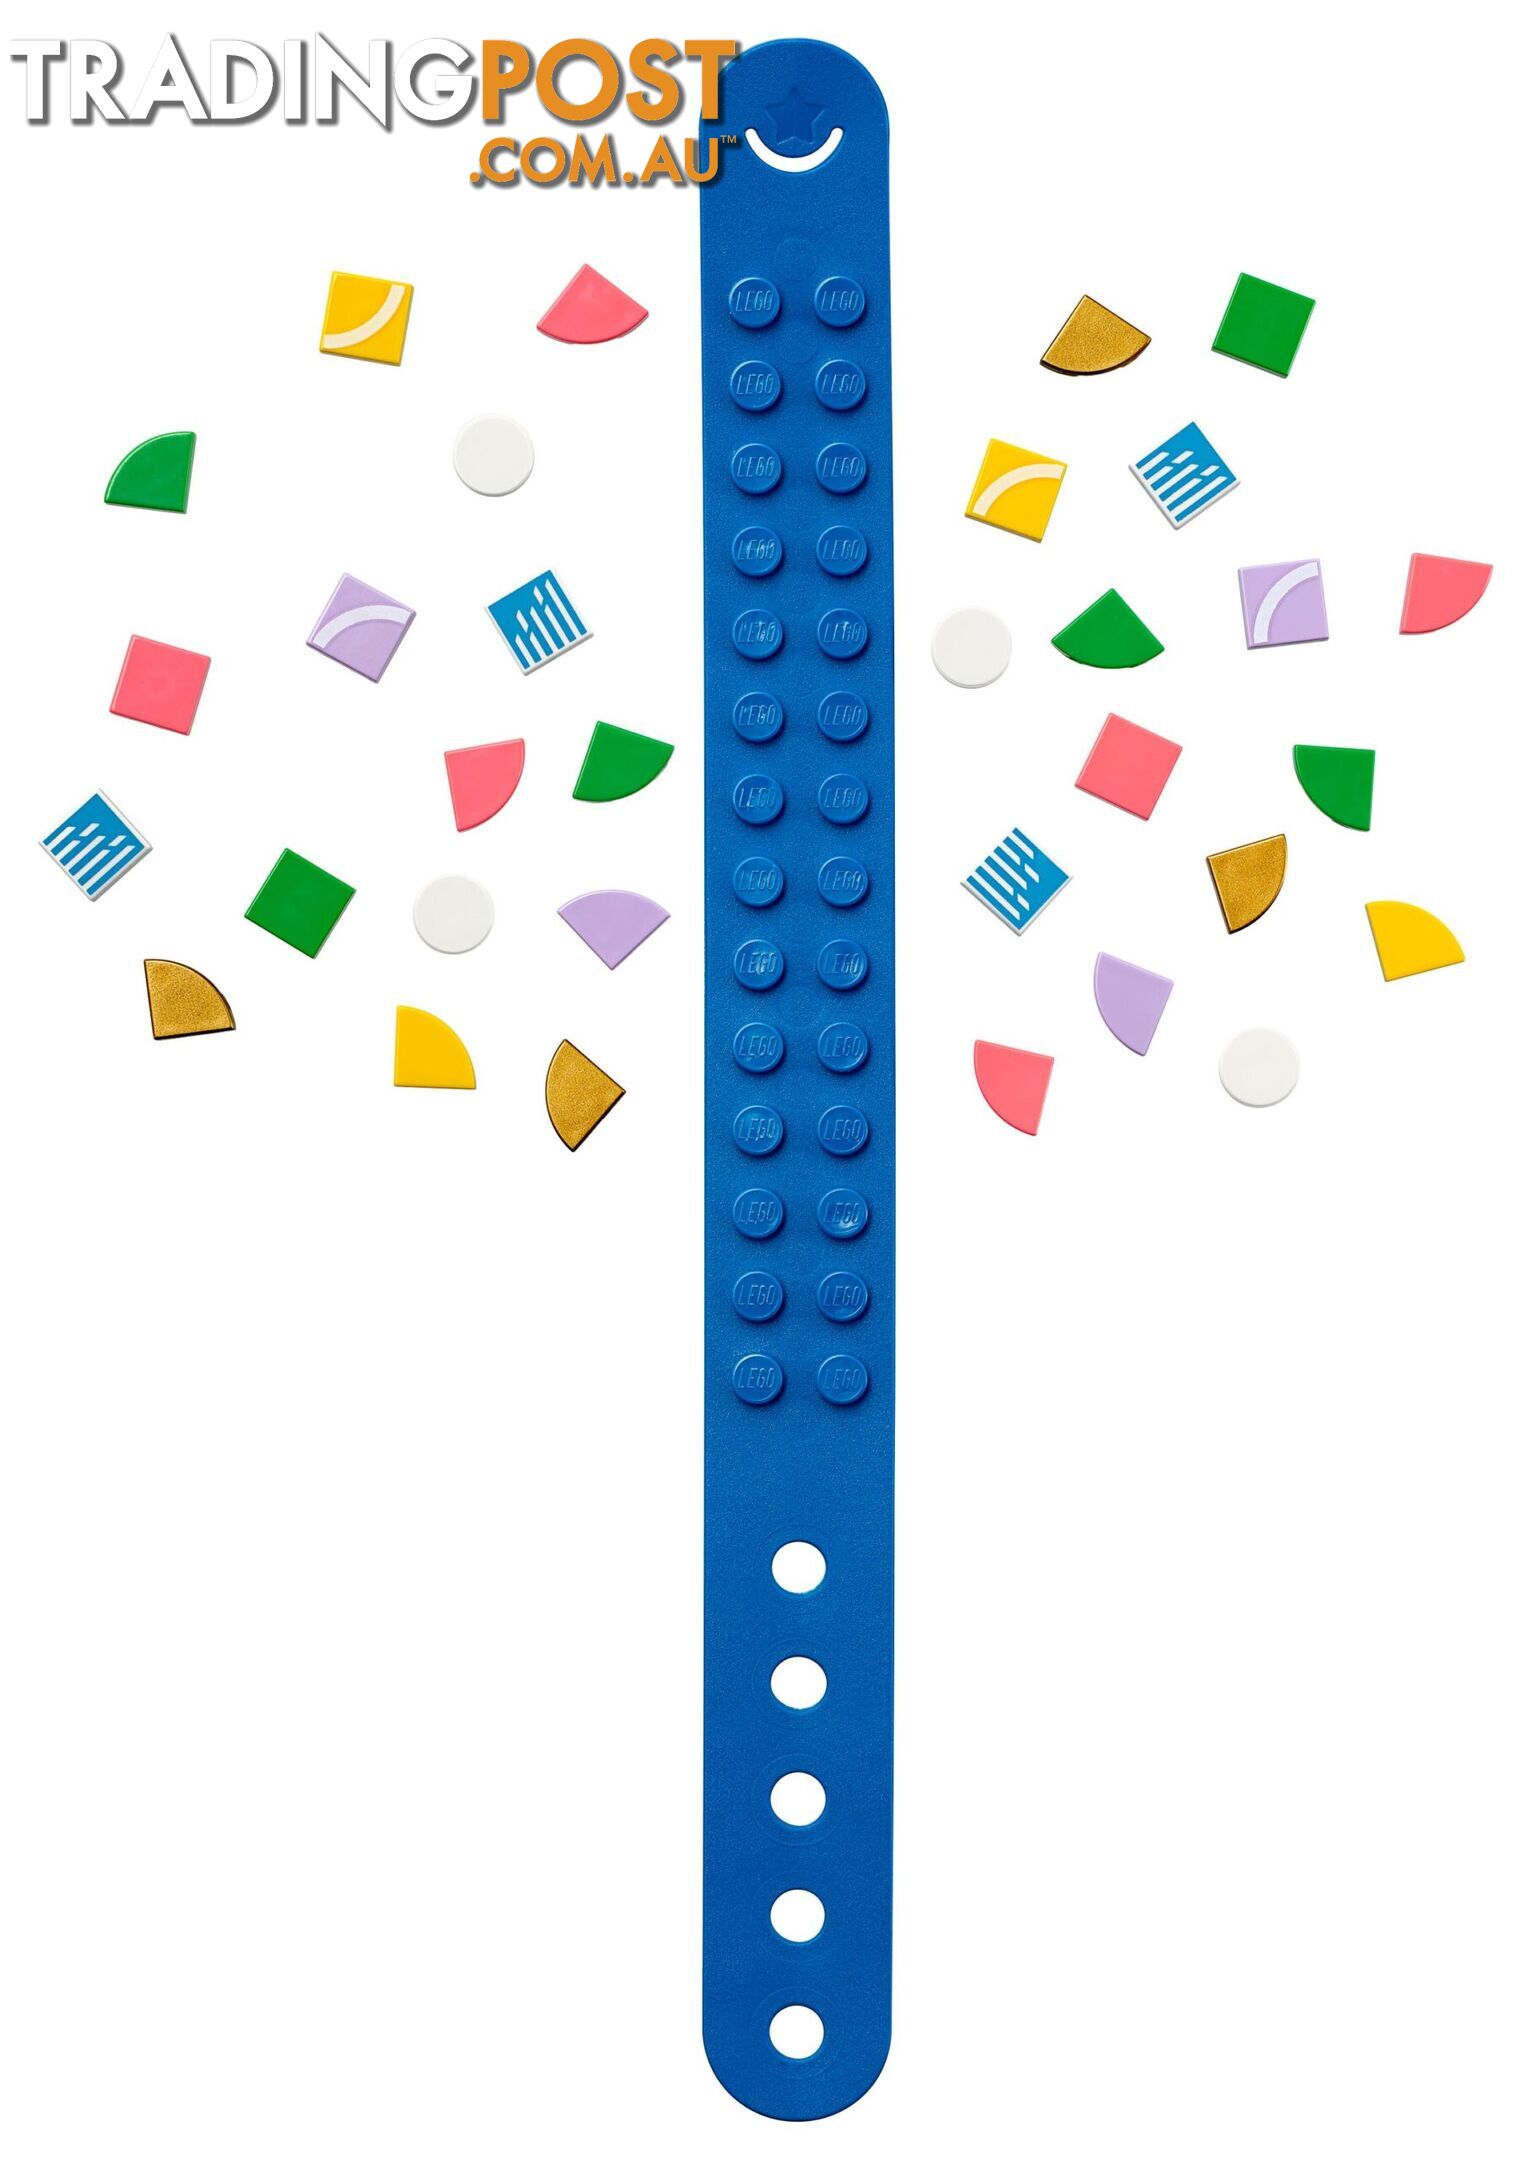 LEGO 41911 Go Team! Bracelet  - DOTS - 5702016668575